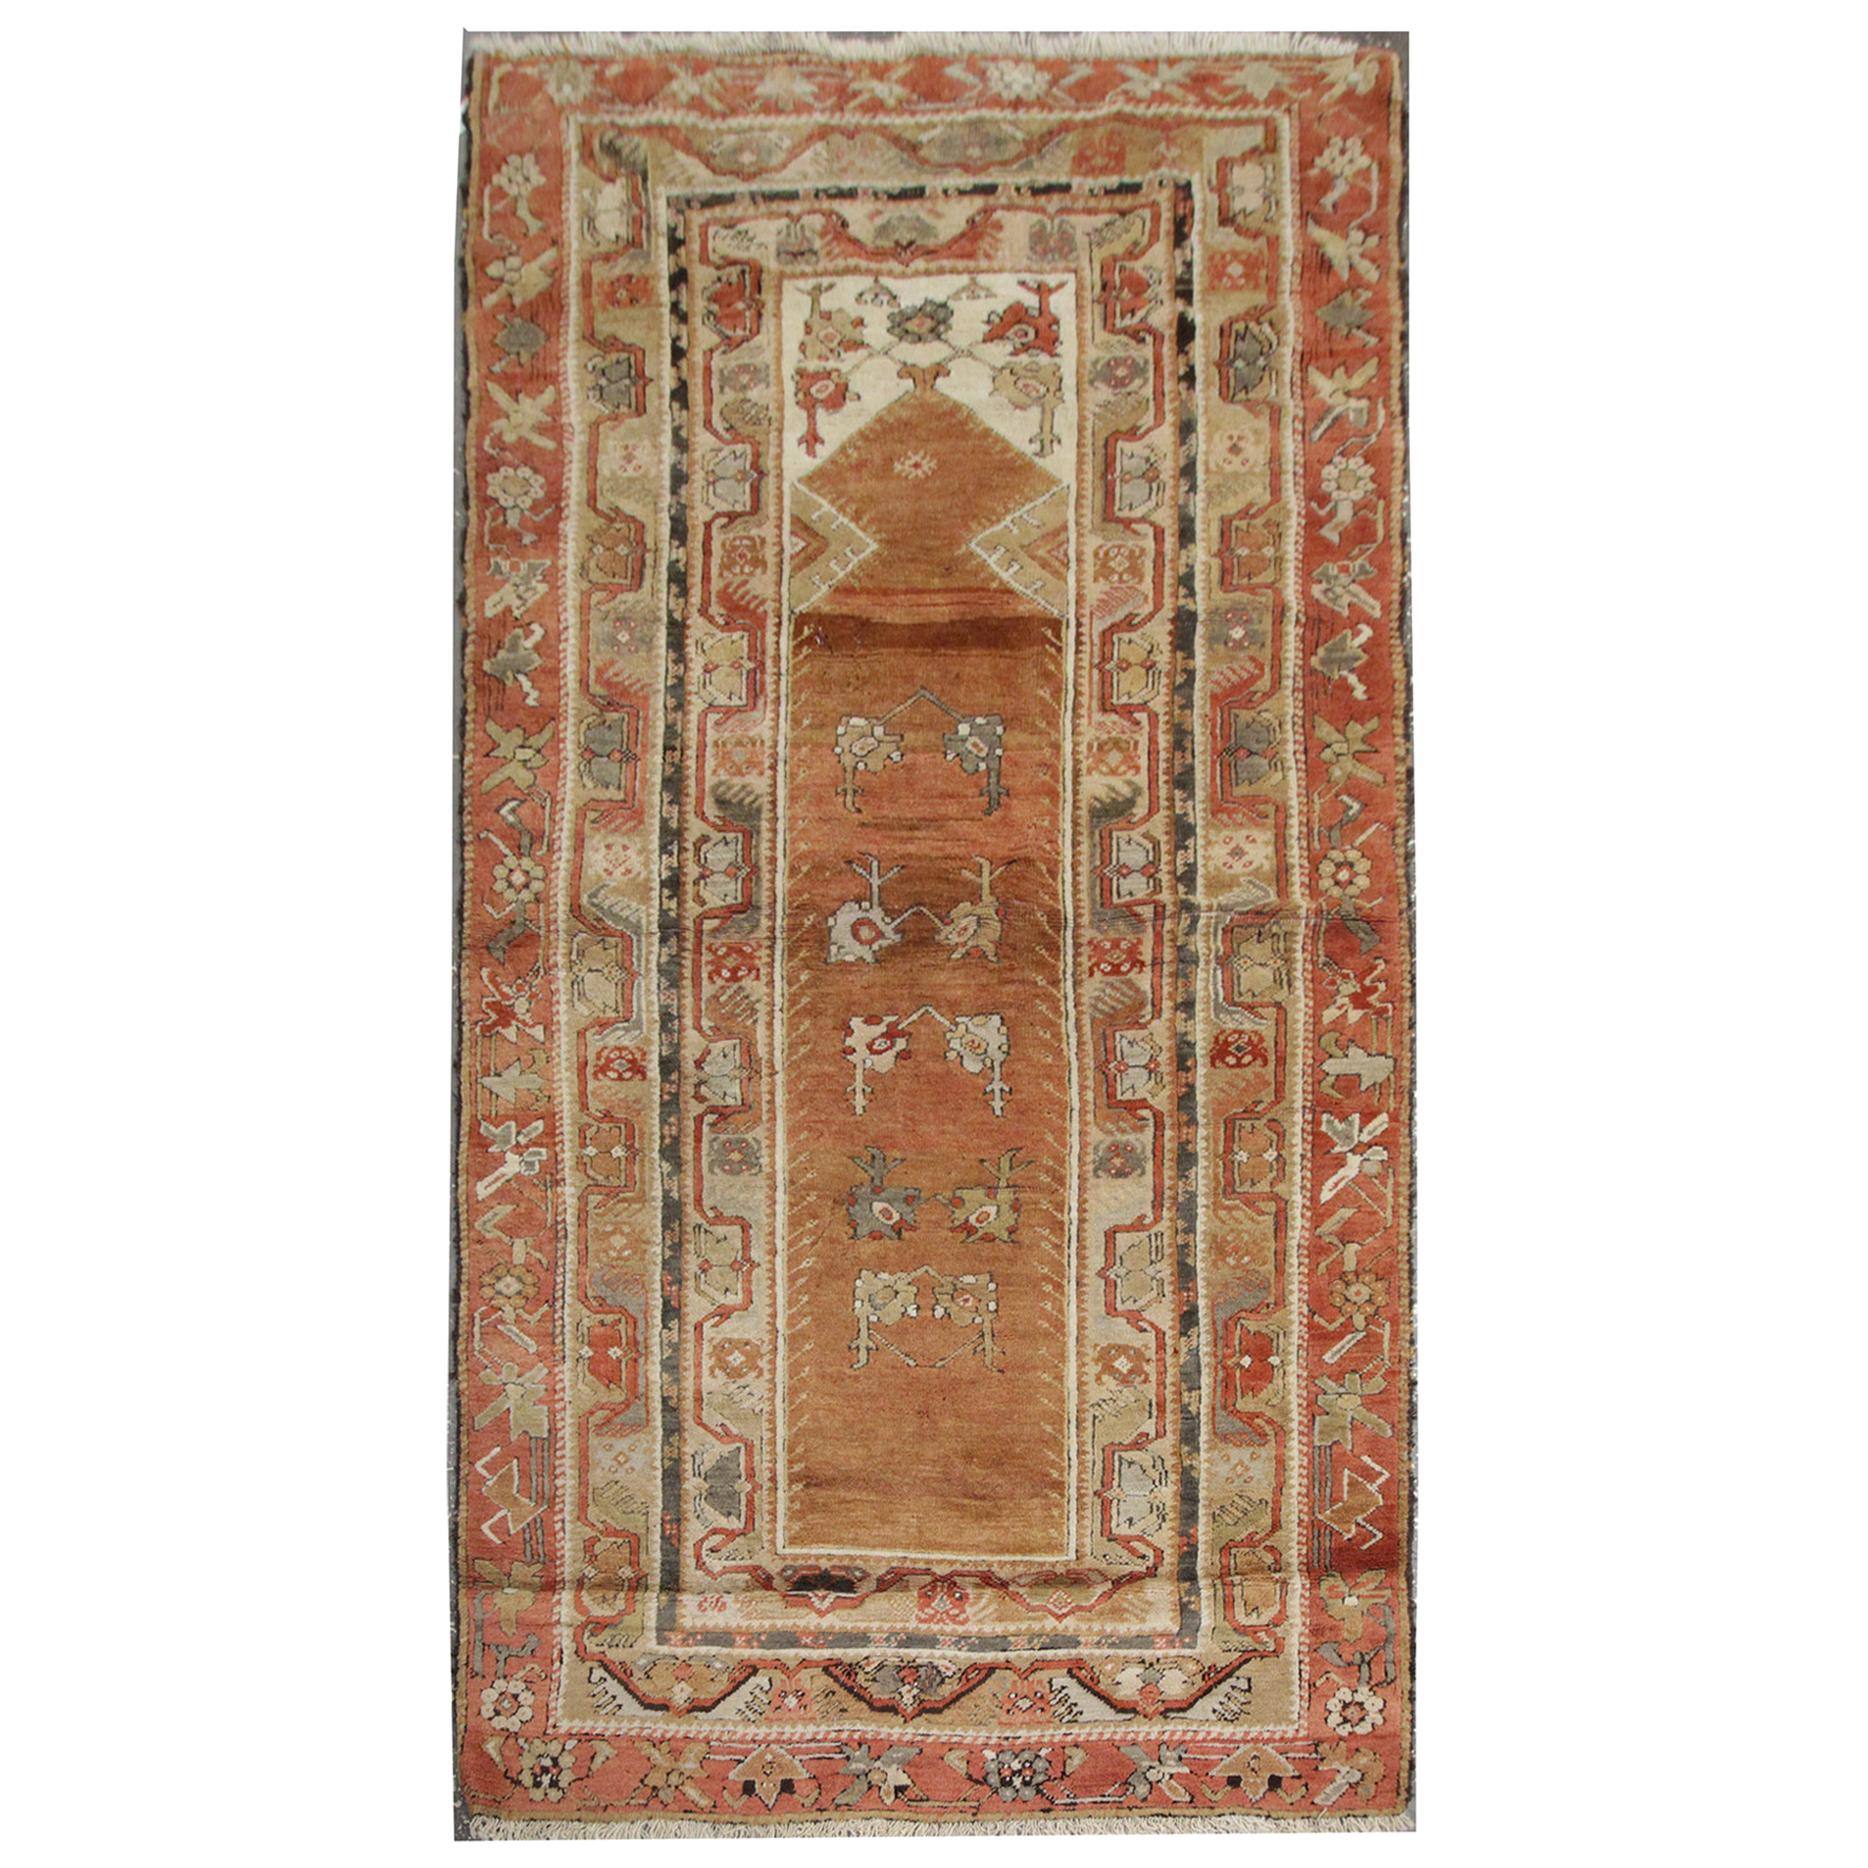 Antique Rug Turkish Traditional Handmade Carpet Brown Living Room Rug for Sale For Sale